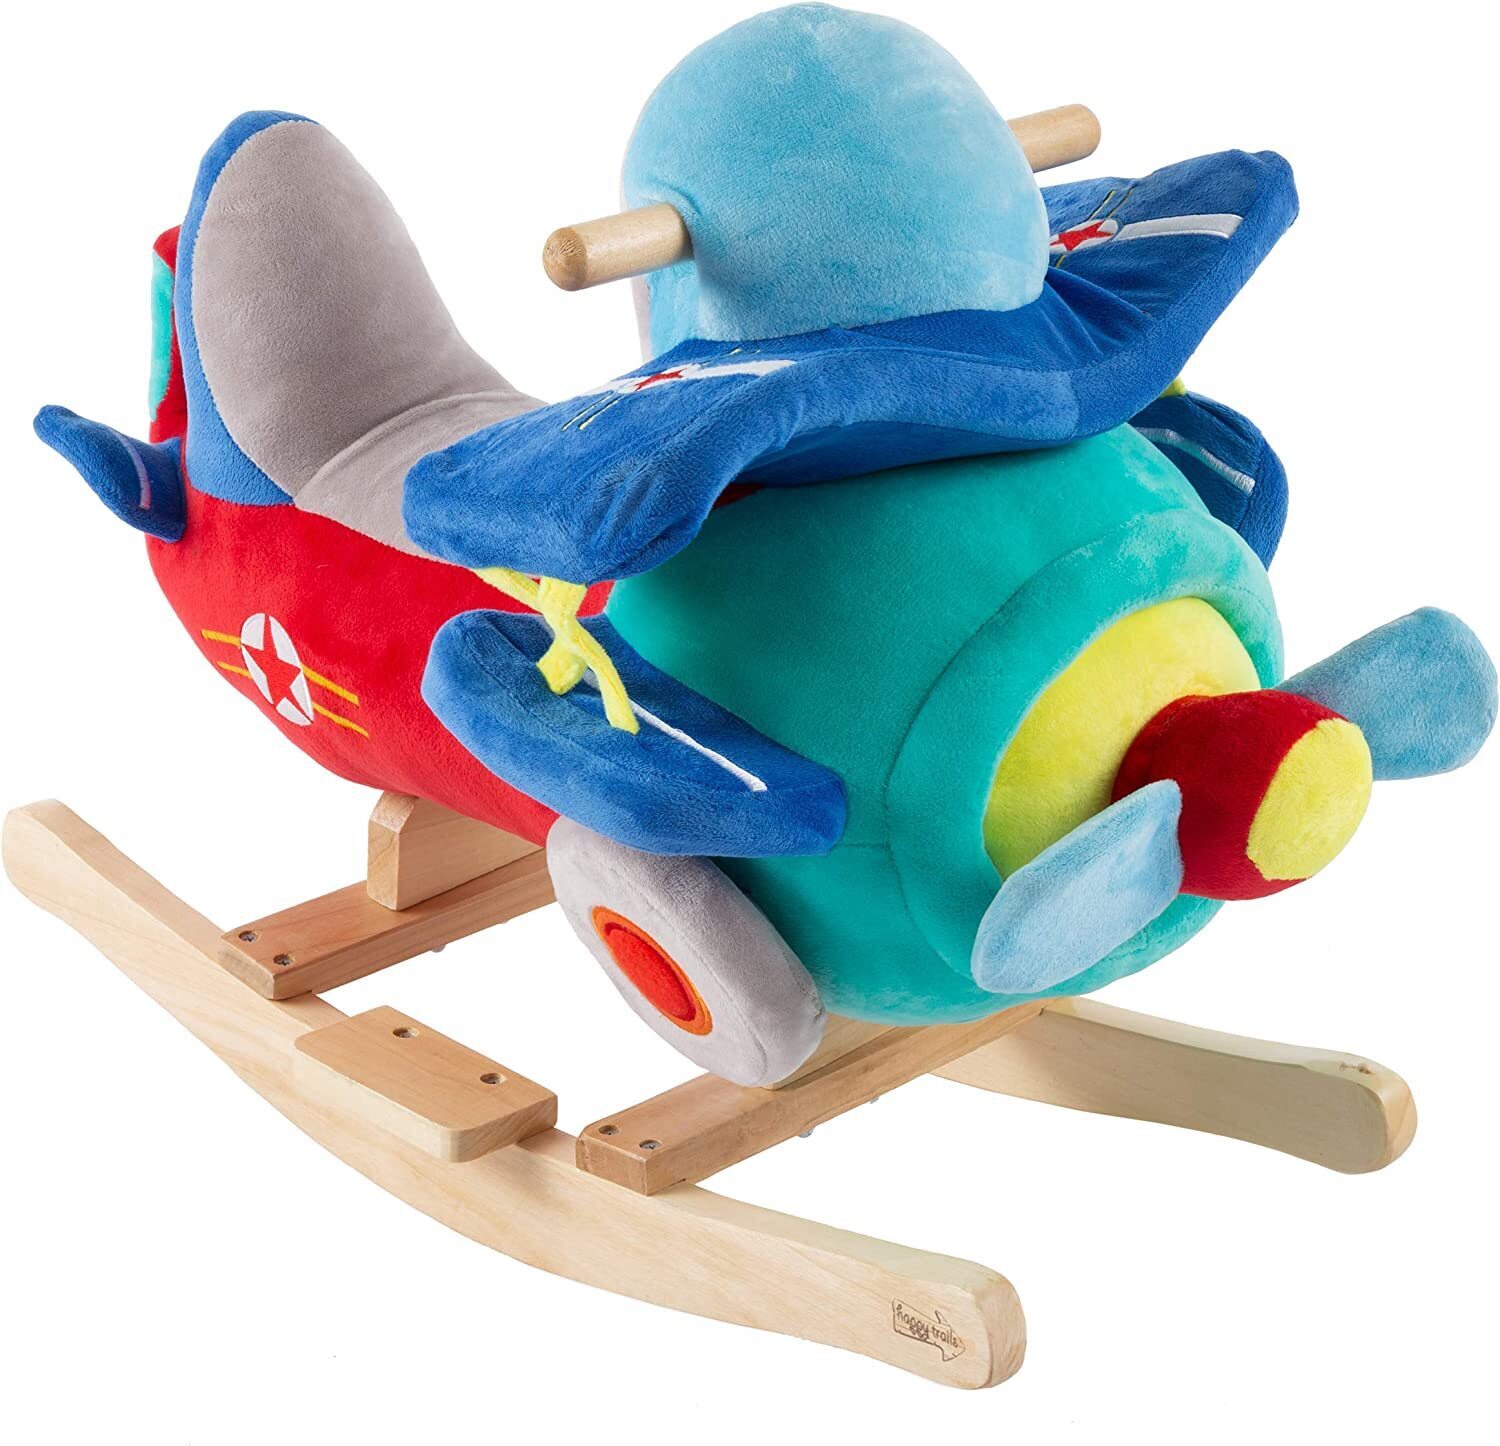 Soft Plush Rocking Airplane Ride On Toy